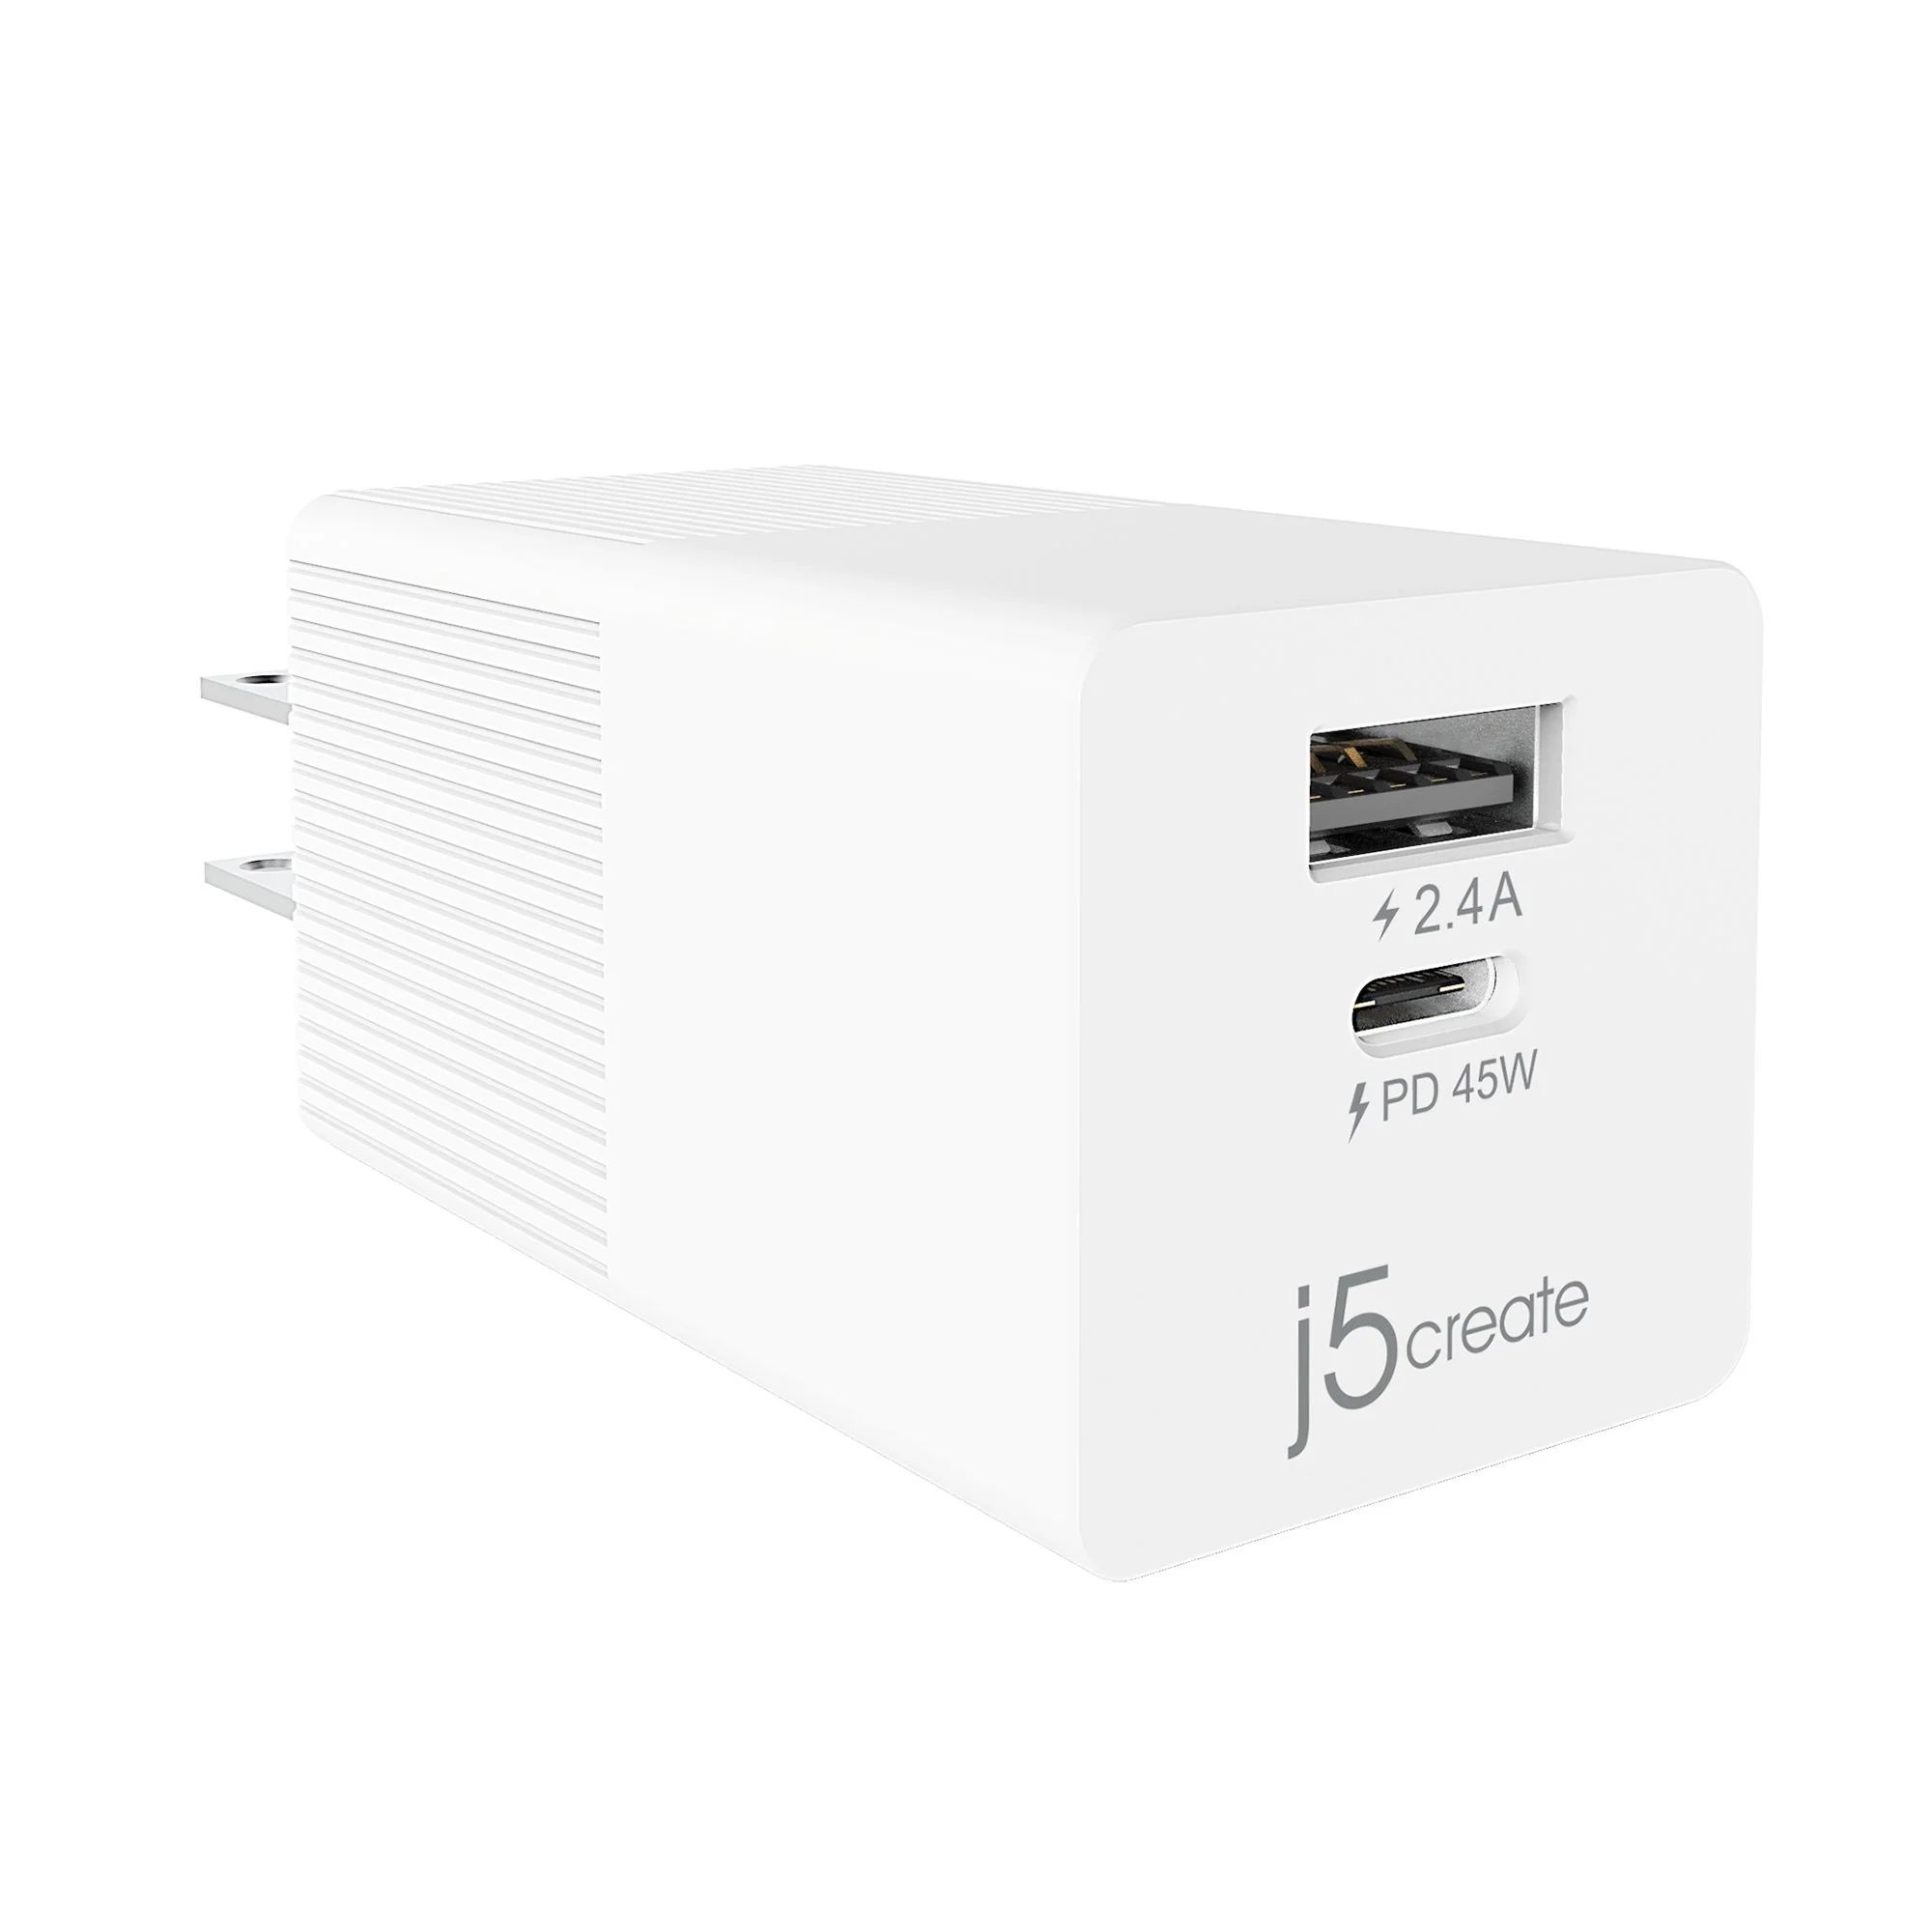 Сетевое зарядное устройство j5create 45W JUP2445 сетевое зарядное устройство j5create 100w pd usb c™ super charger